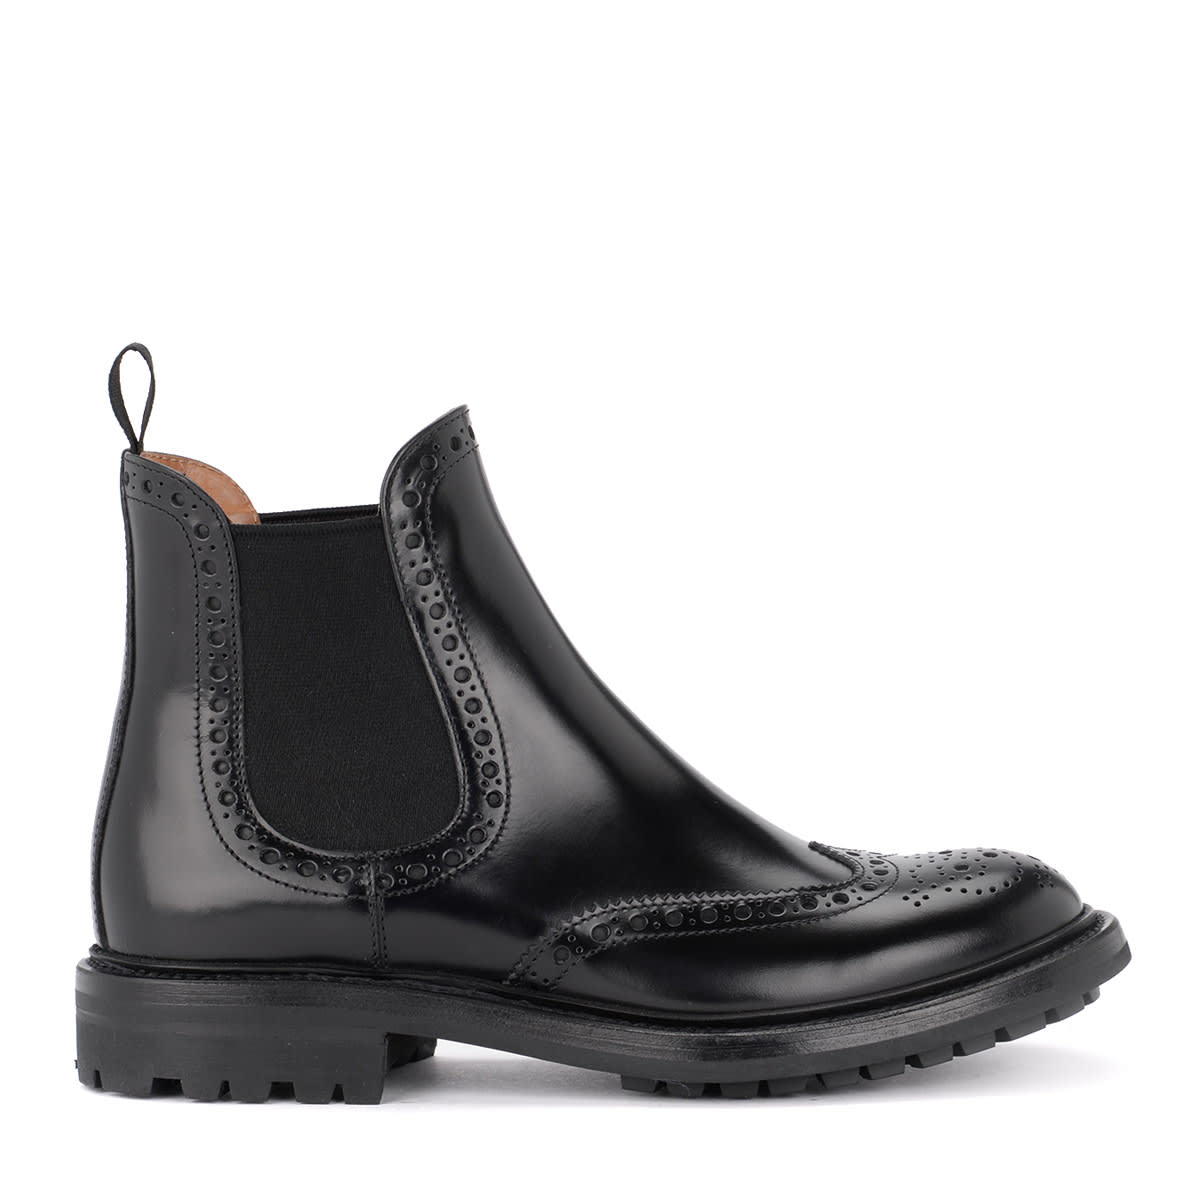 Churchs Aura Black Leather Ankle Boots